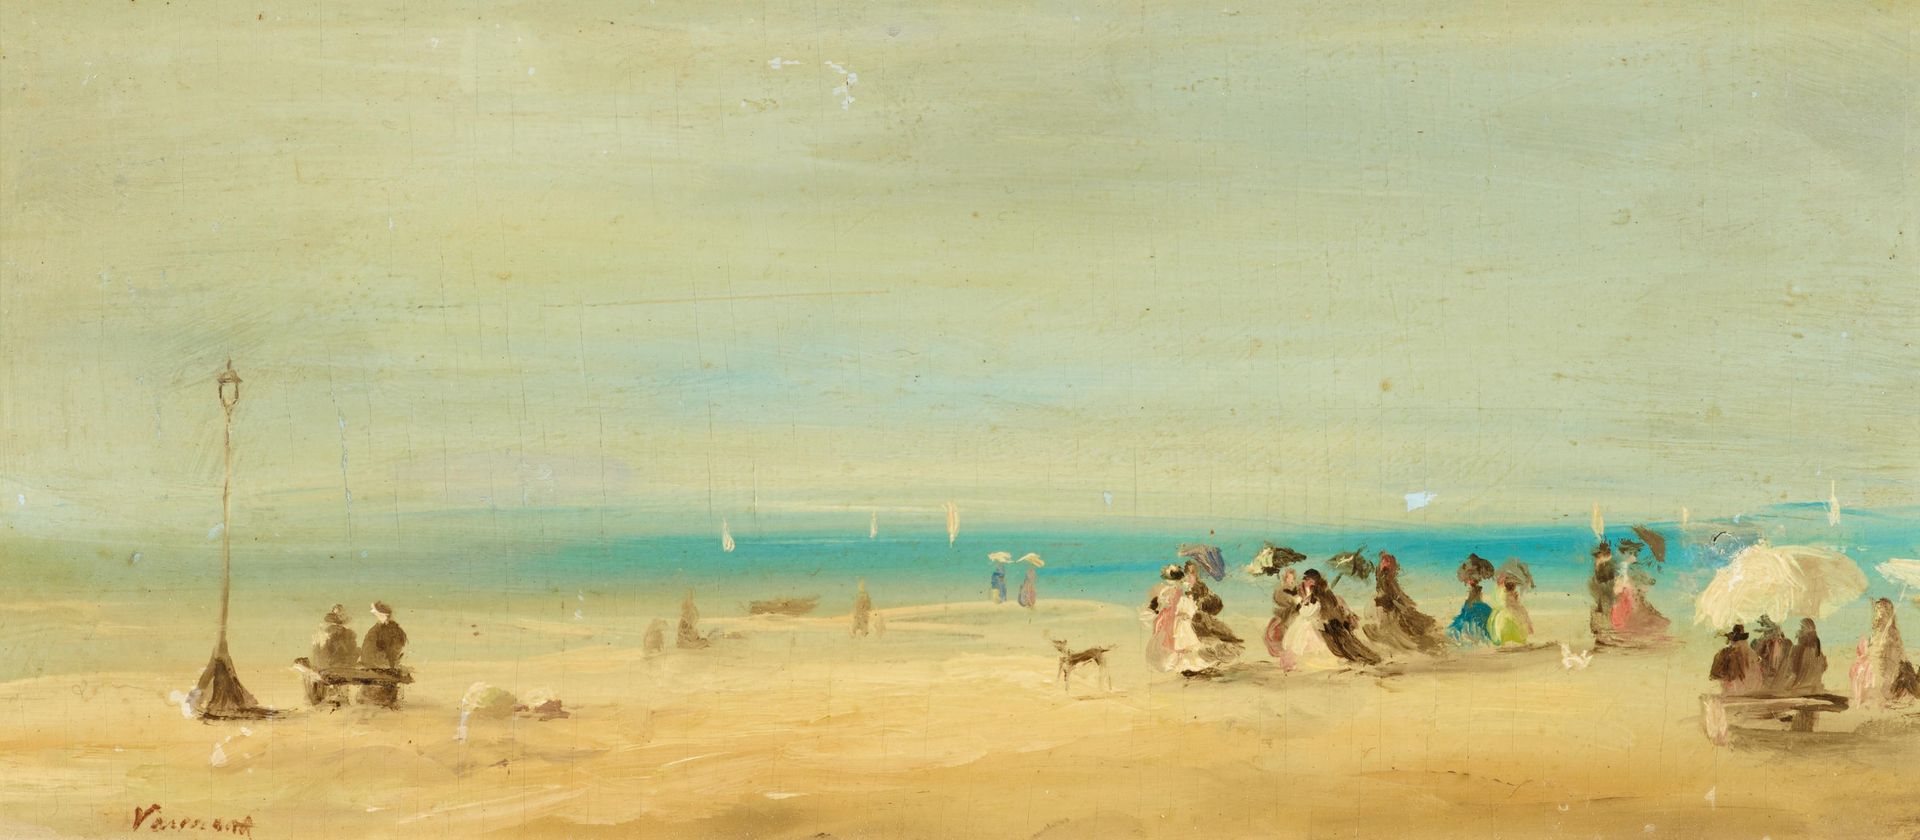 Französische Schule 法国学校
约1900年
标题： 海滩上的社会。
技术： 木板油画。
尺寸： 13 x 27,5厘米。
左下角签名不清楚。&hellip;